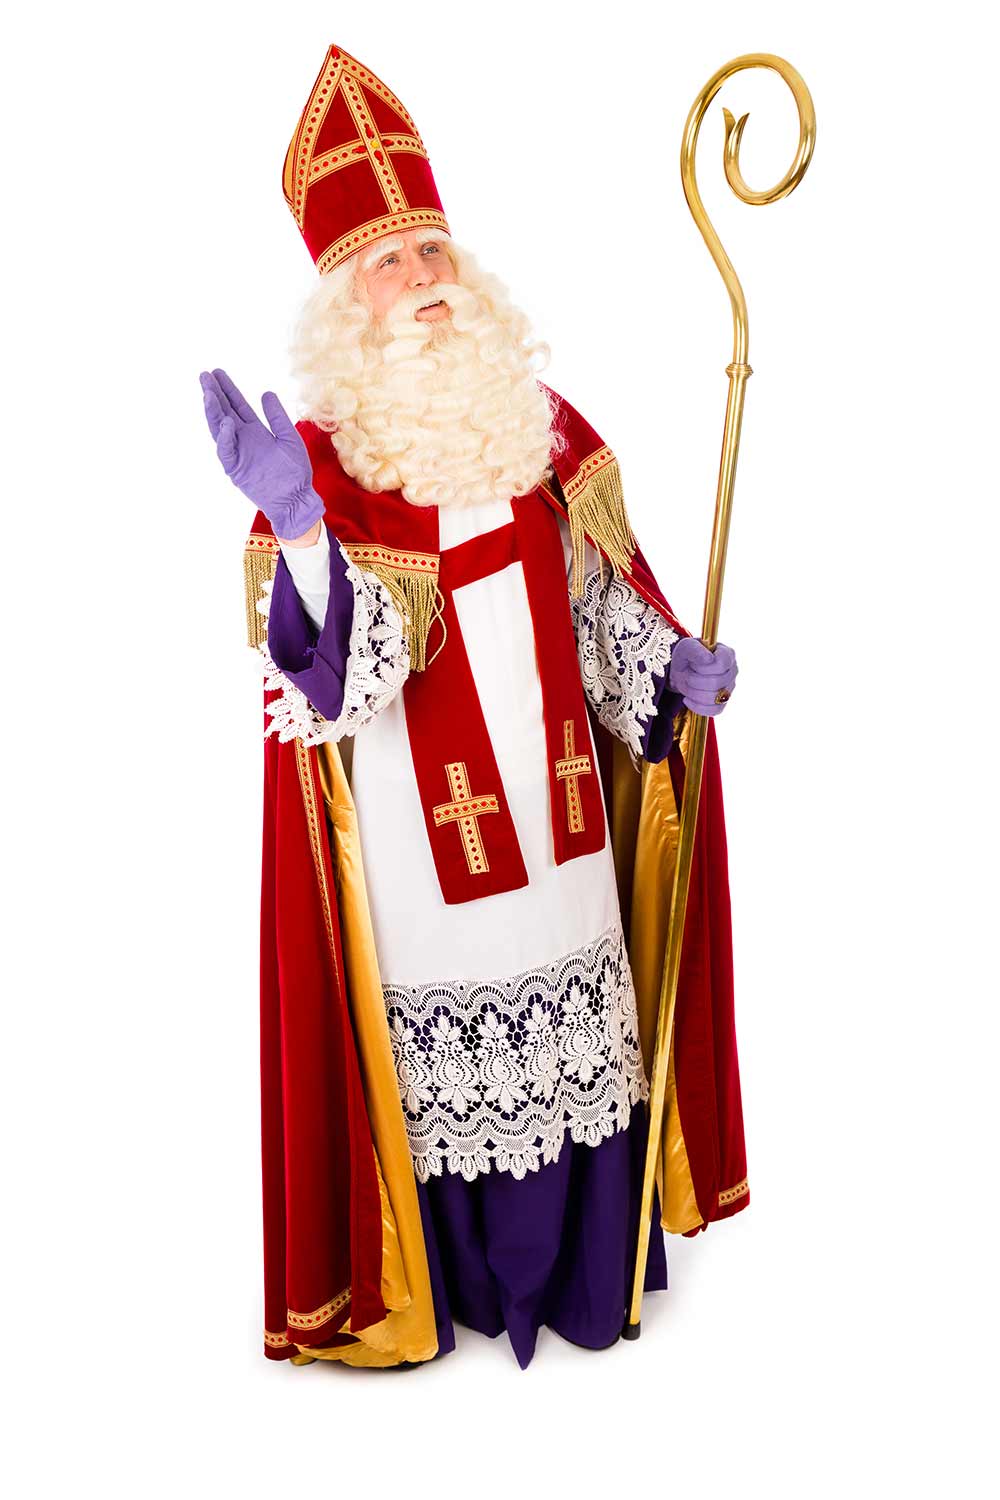 omhelzing Uitrusting Smederij Sinterklaas kostuum extra deluxe | Thedecorationfactory (TIP) 076-5427487